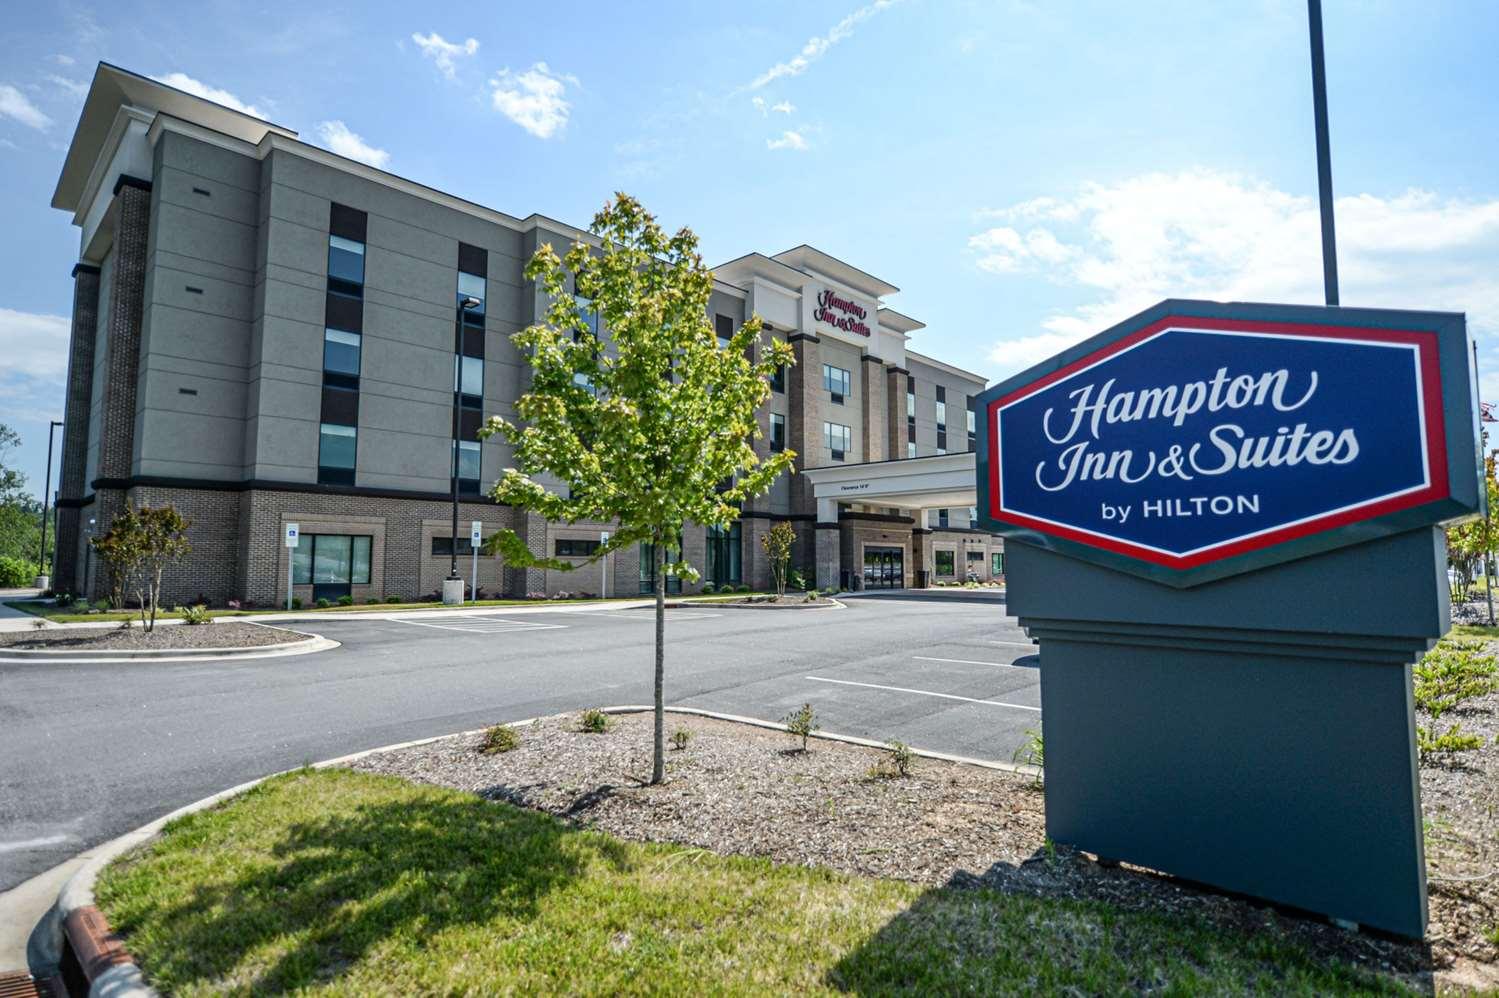 Hampton Inn & Suites Lenoir in Lenoir, NC